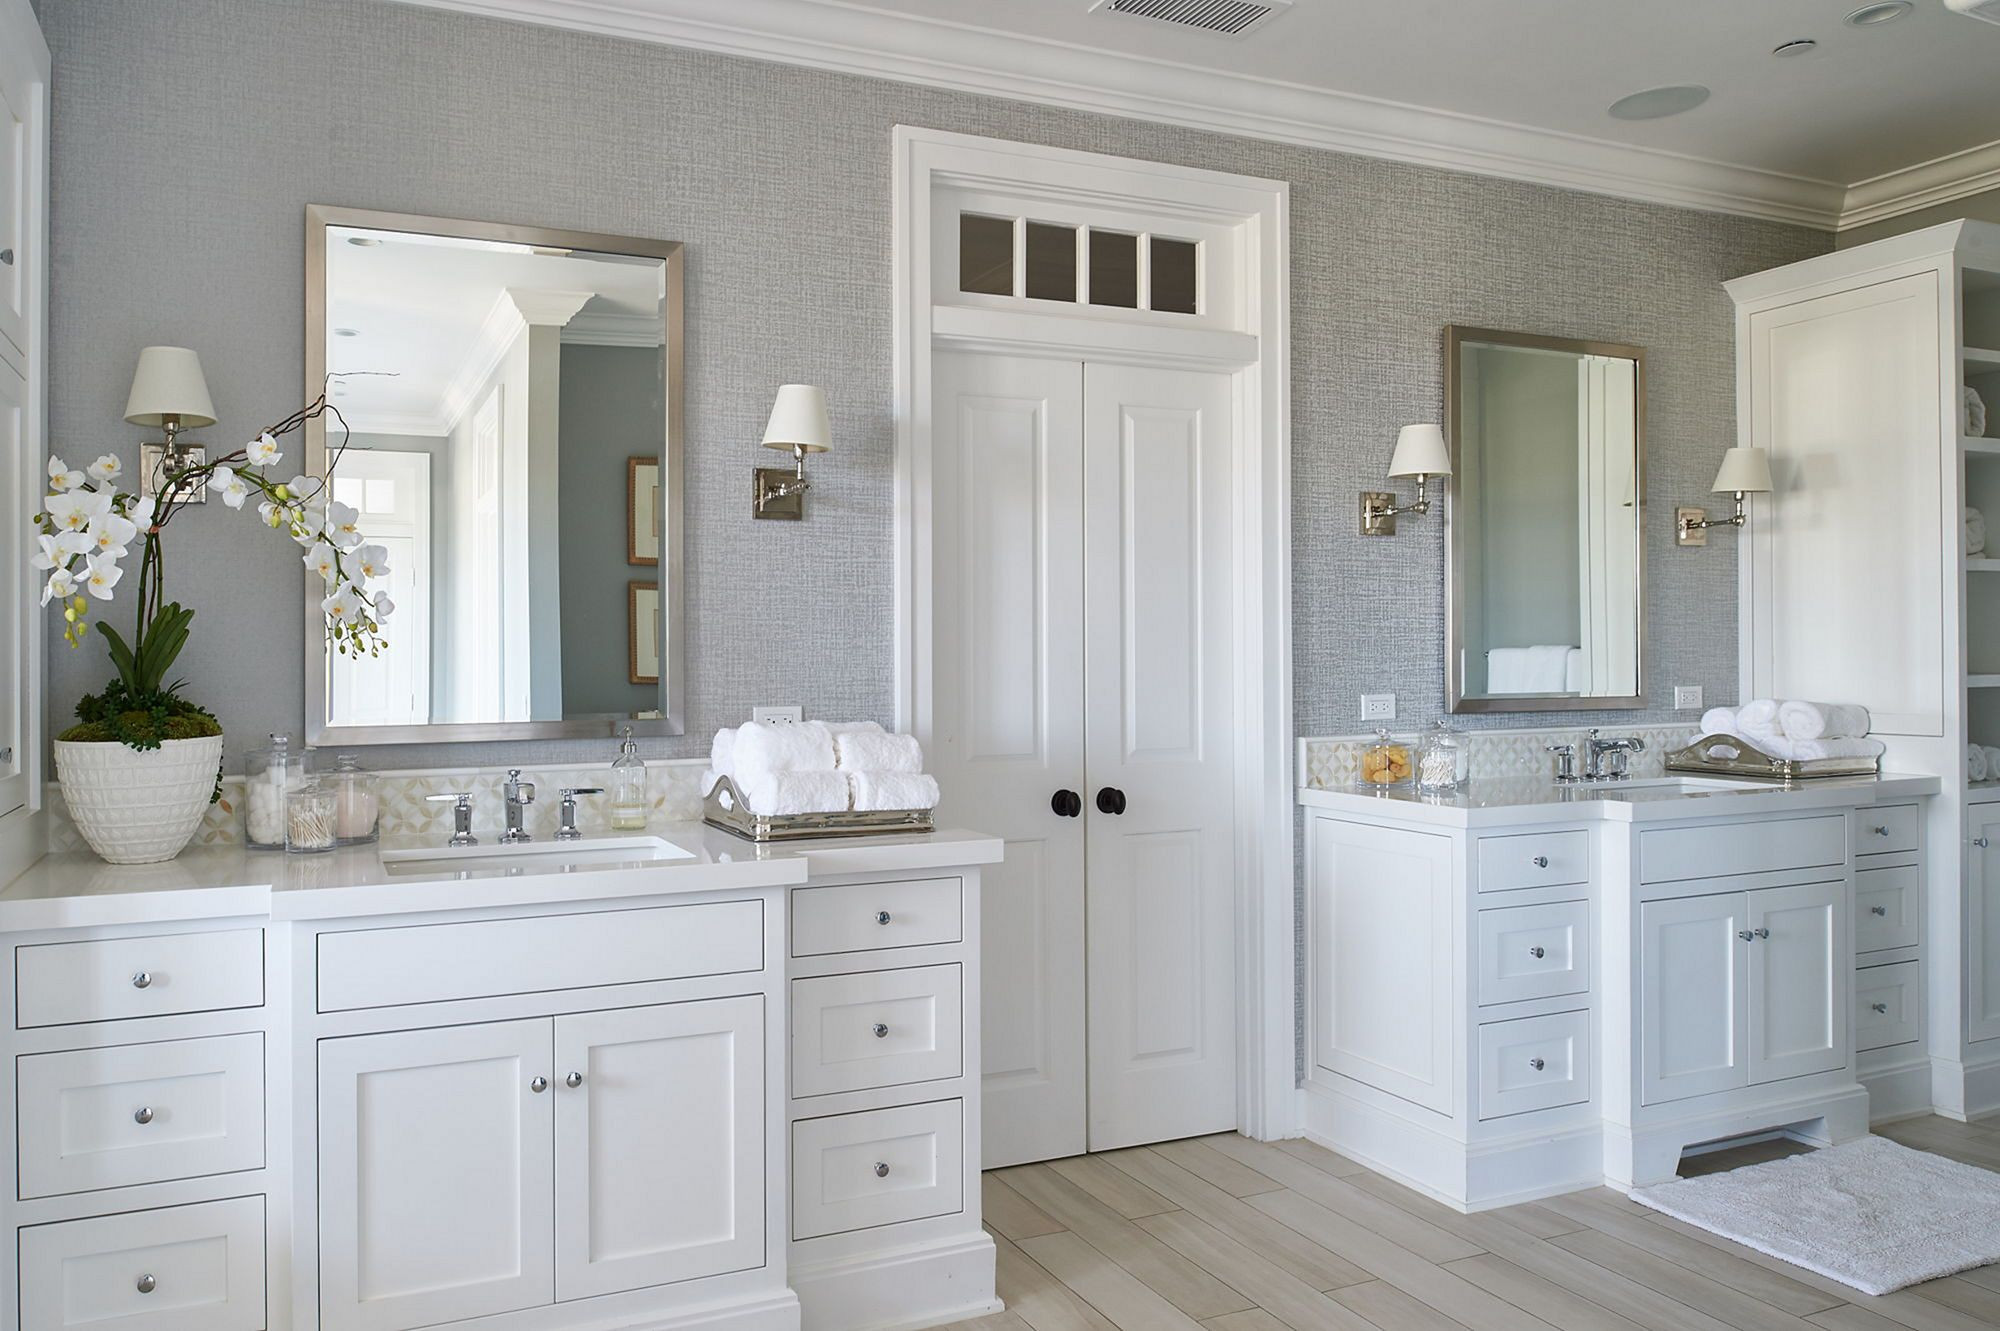 Master Bathroom Layouts
 45 Best Master Bathroom Design Ideas For Your Big Home